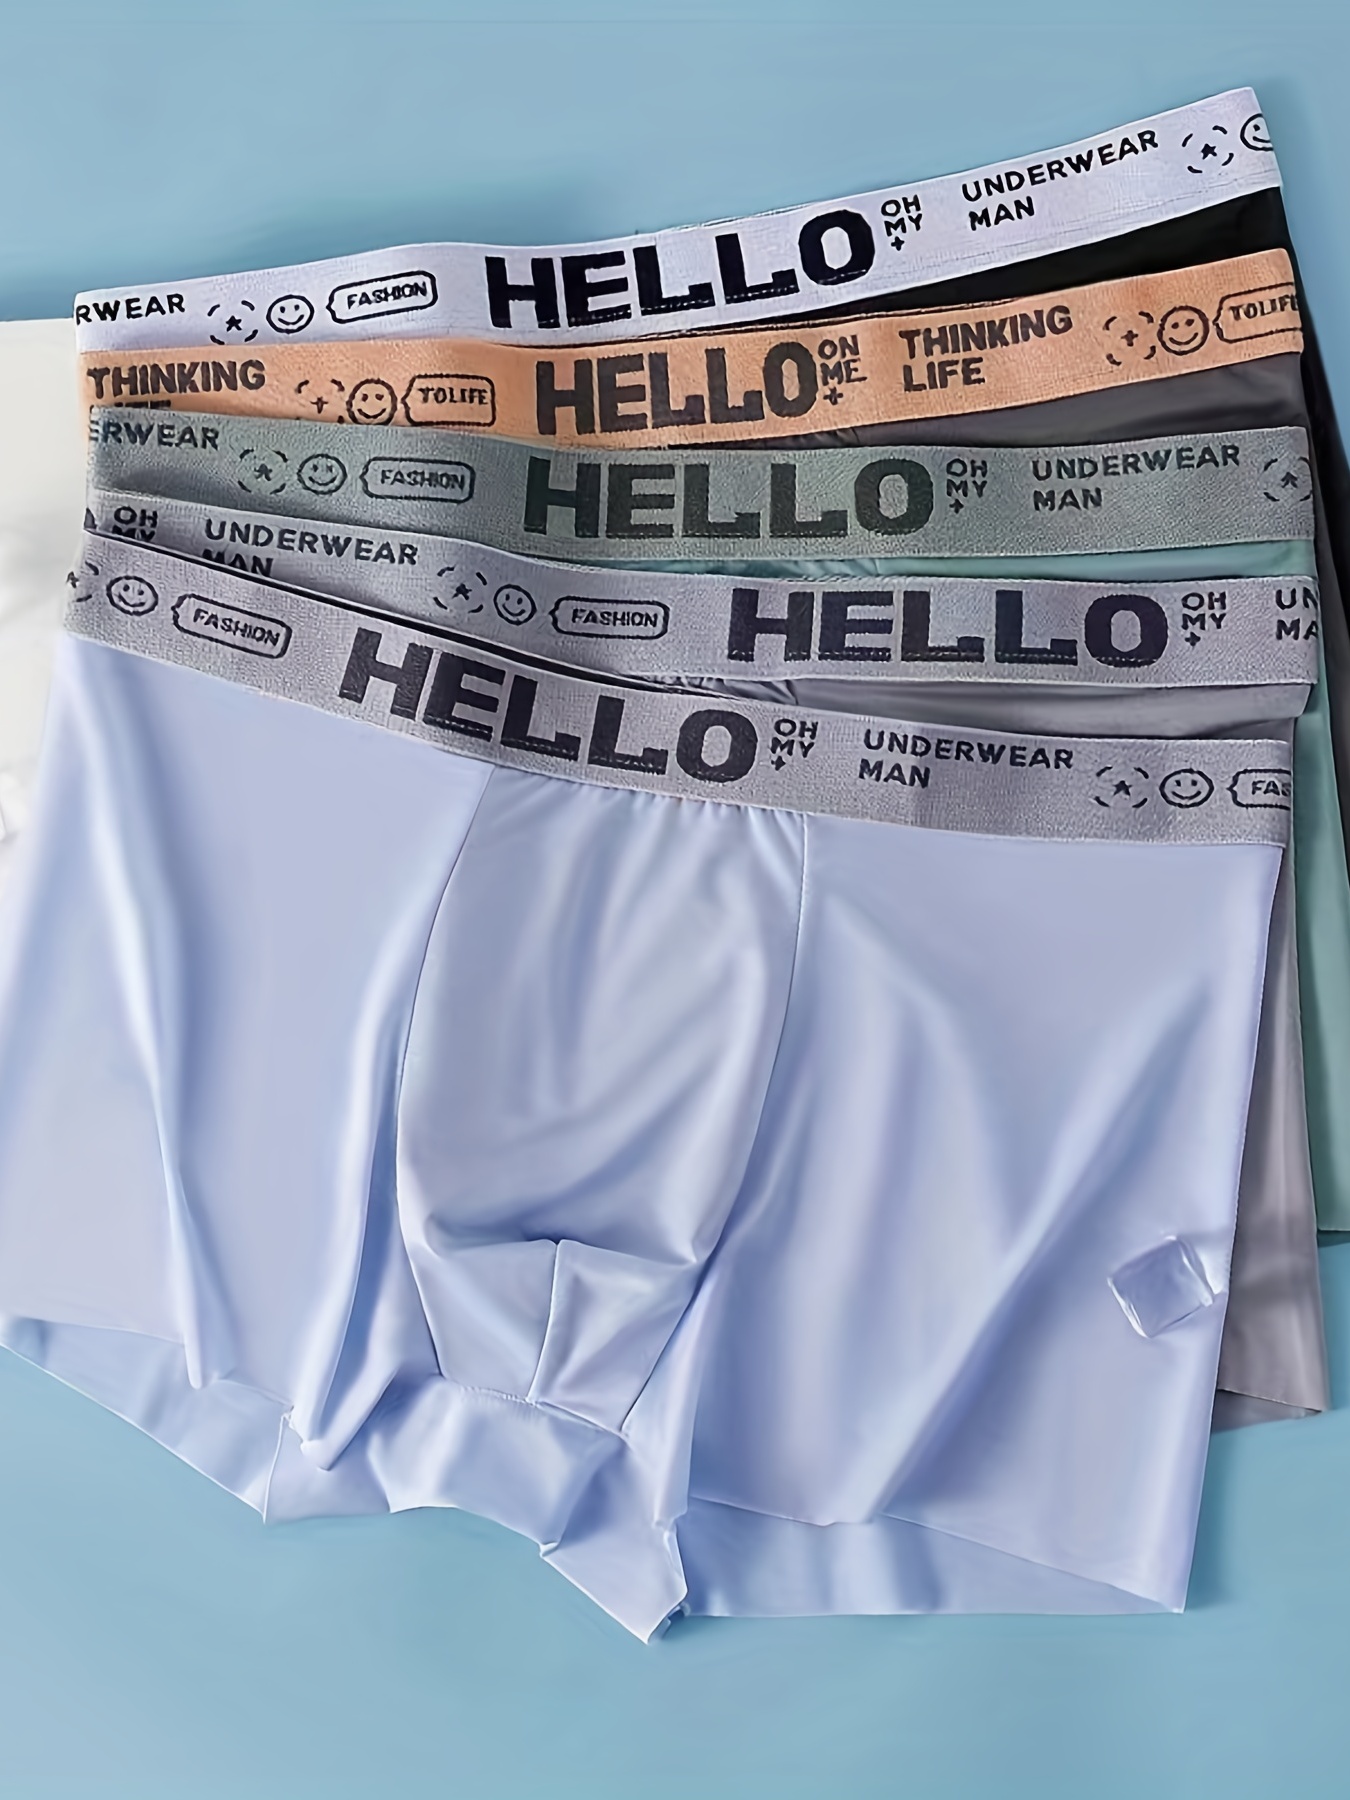 Men's Sexy Underwear - Stretch Camo Boxer Briefs – Oh My!